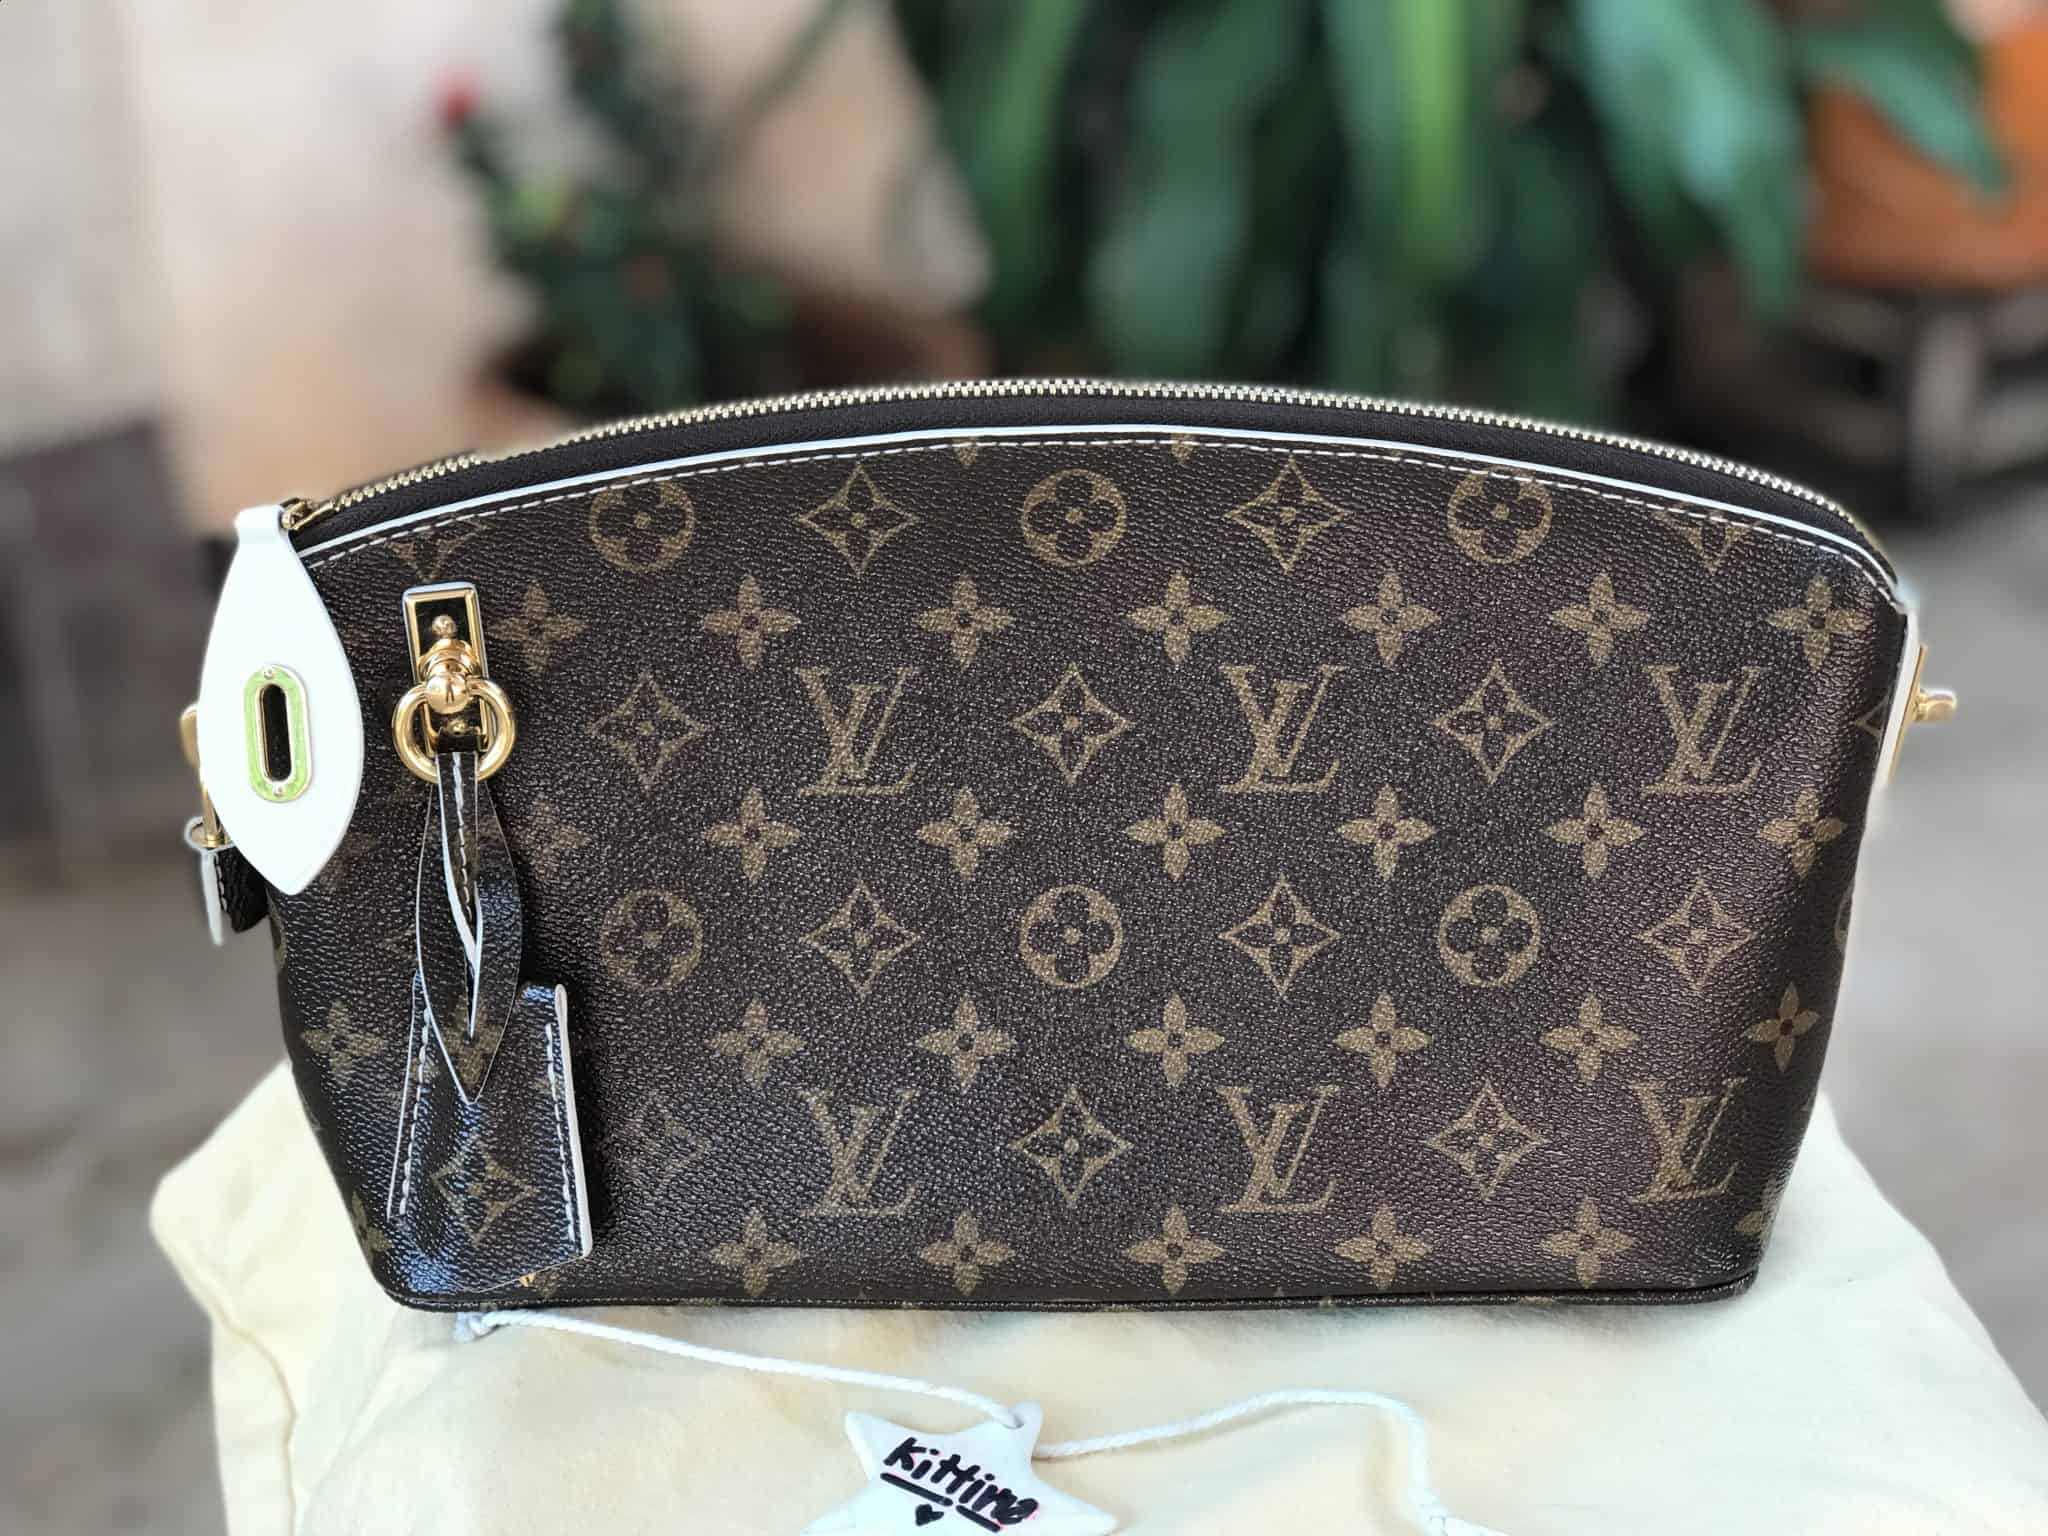 New Louis Vuitton Monogram Fetish Lockit Clutch Handbag - Limited Edition -  Women's Handbags - New York, New York, Facebook Marketplace